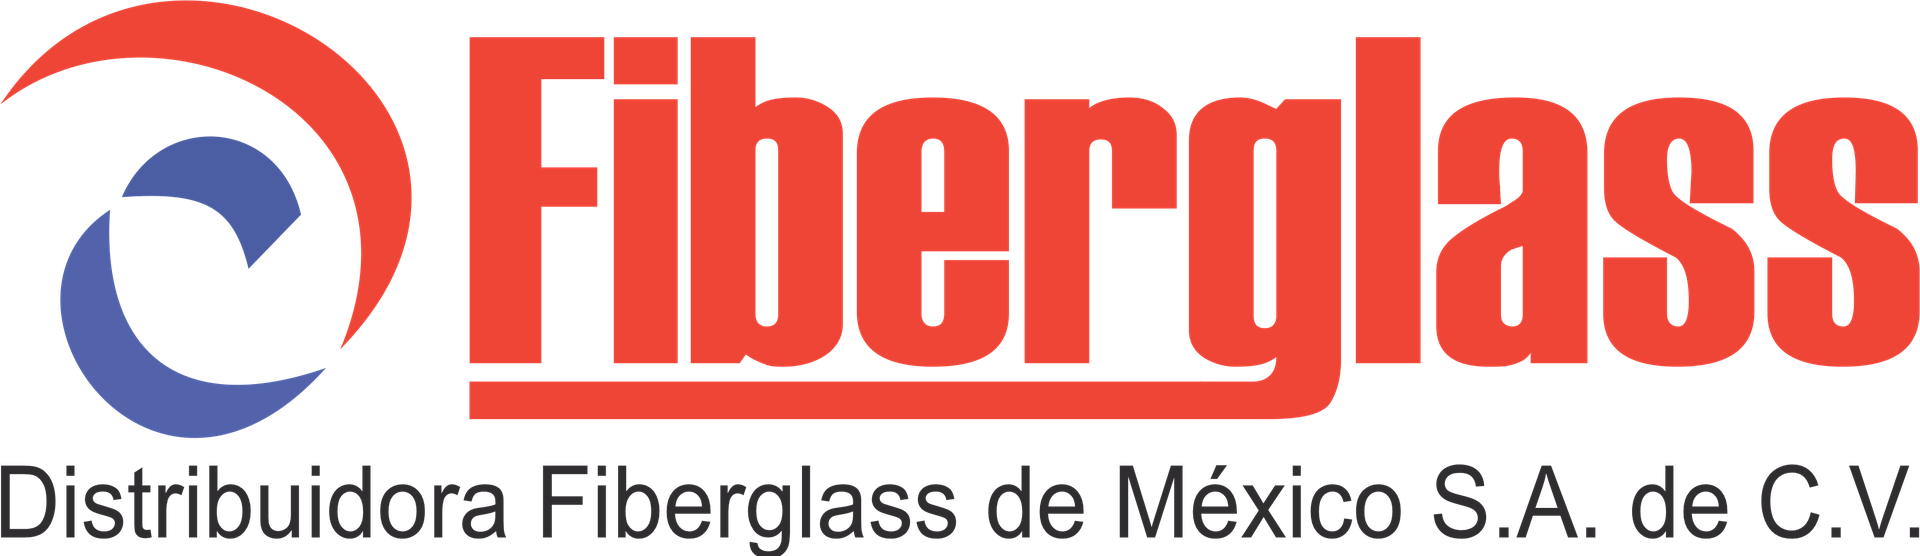 Distribuidora Fiberglass de México